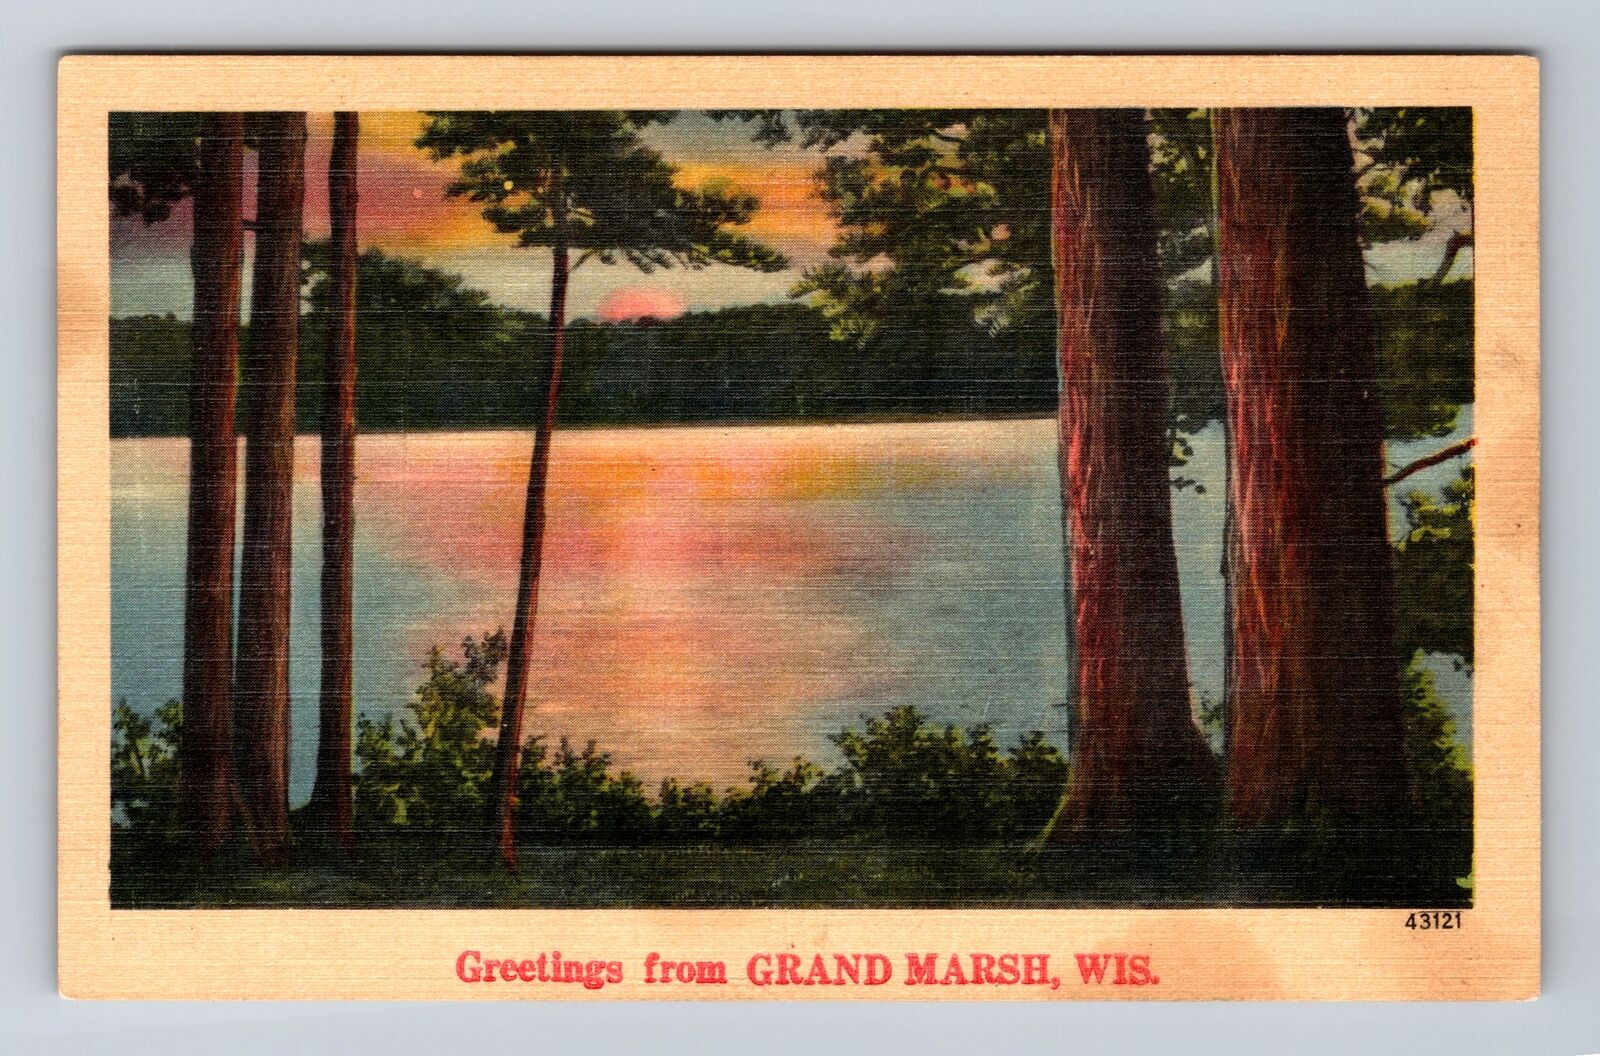 Grand Marsh WI-Wisconsin, Scenic Sunset Lake Greetings Antique Vintage Postcard